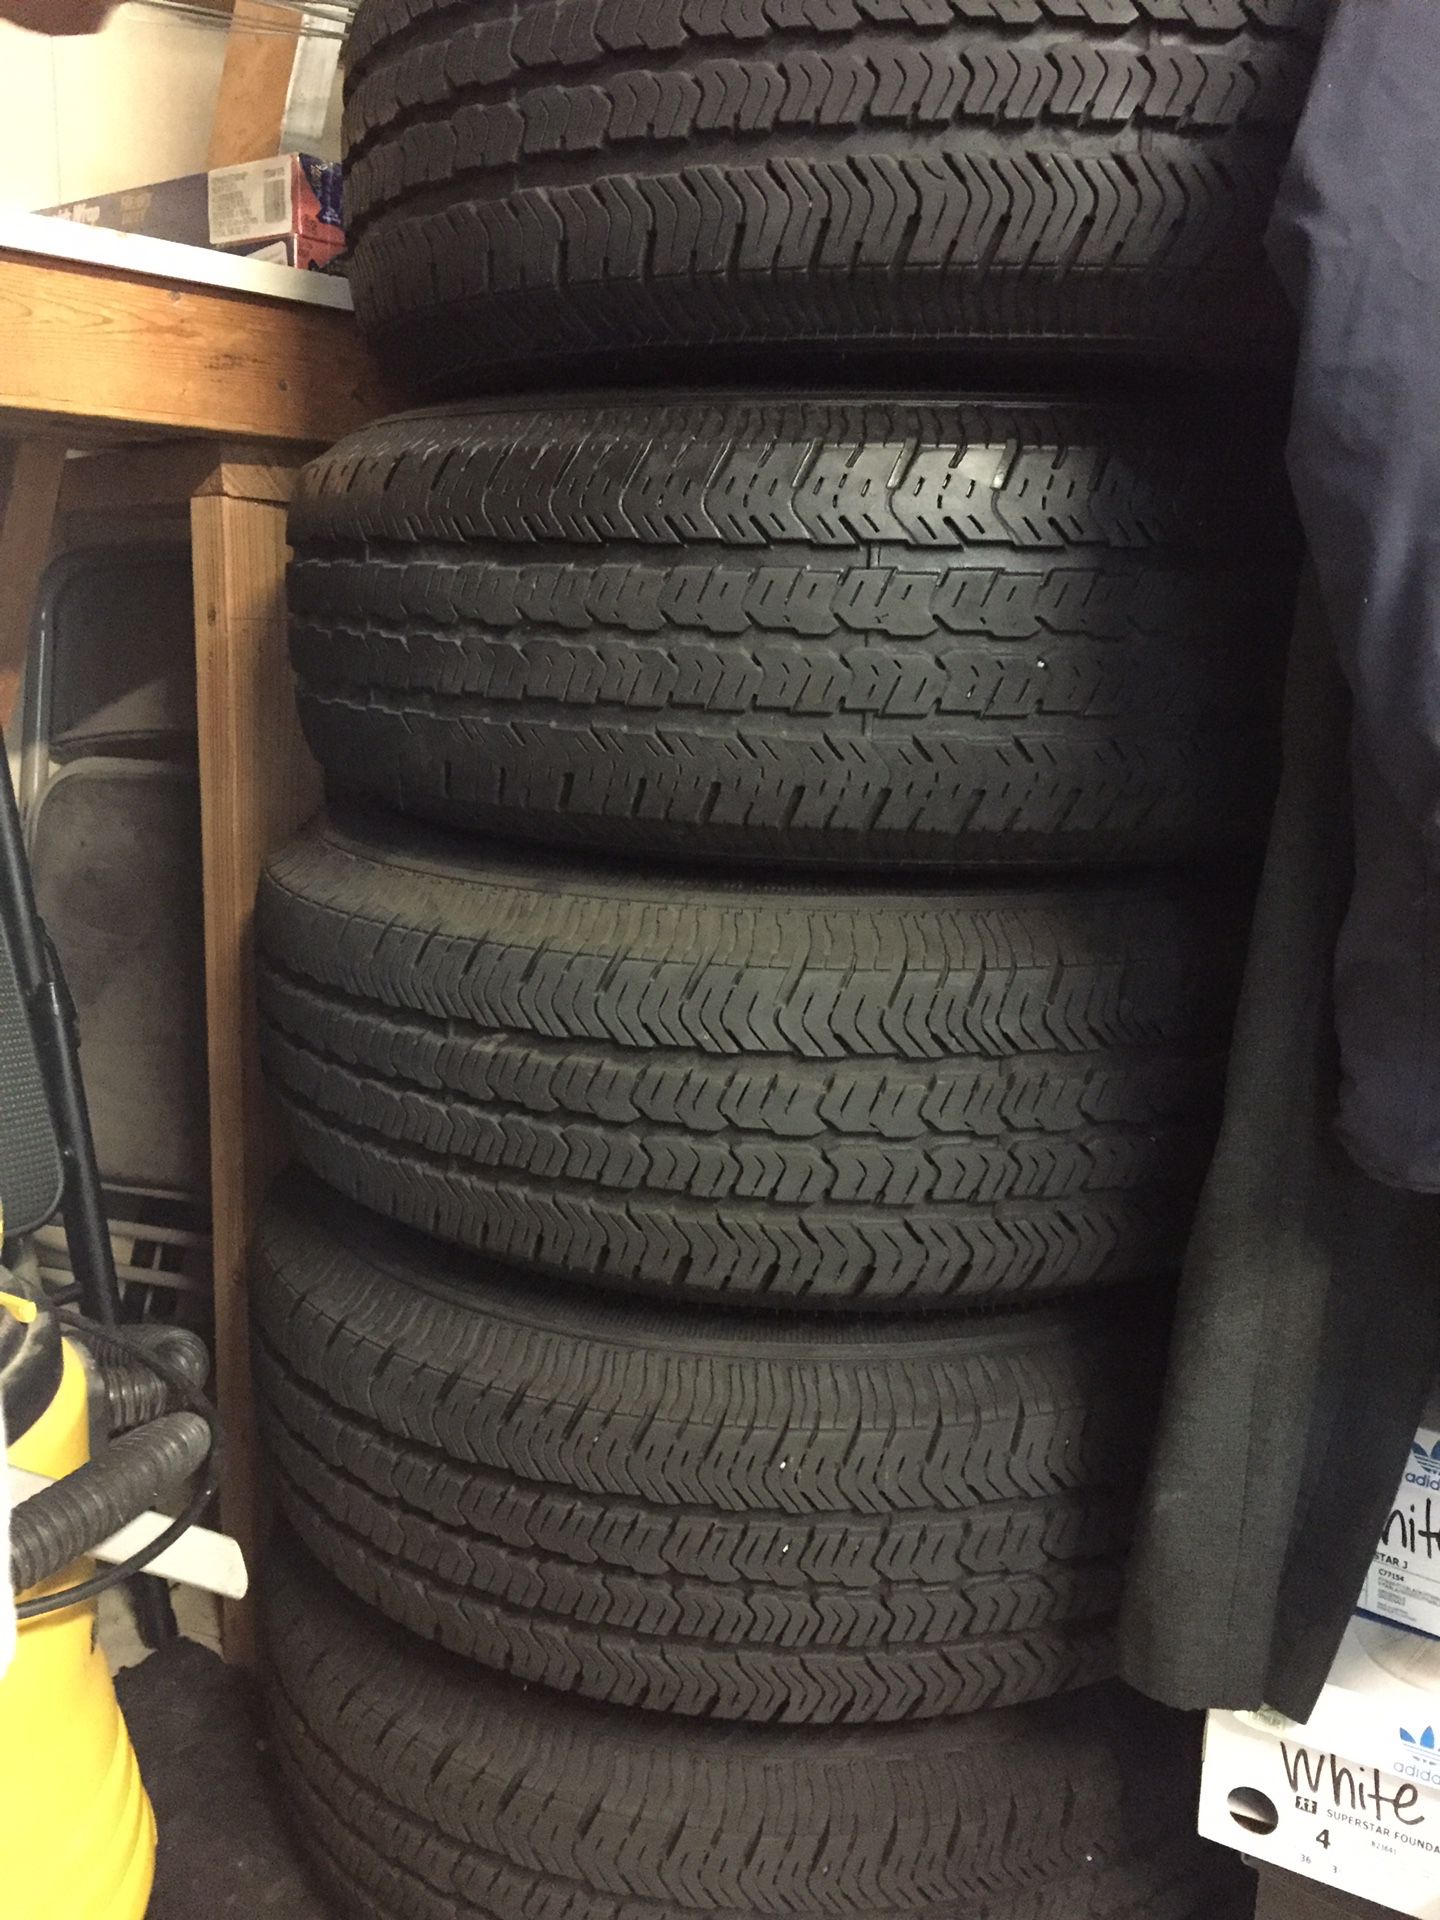 5- 2016 Jeep Wrangler stock tires and rim